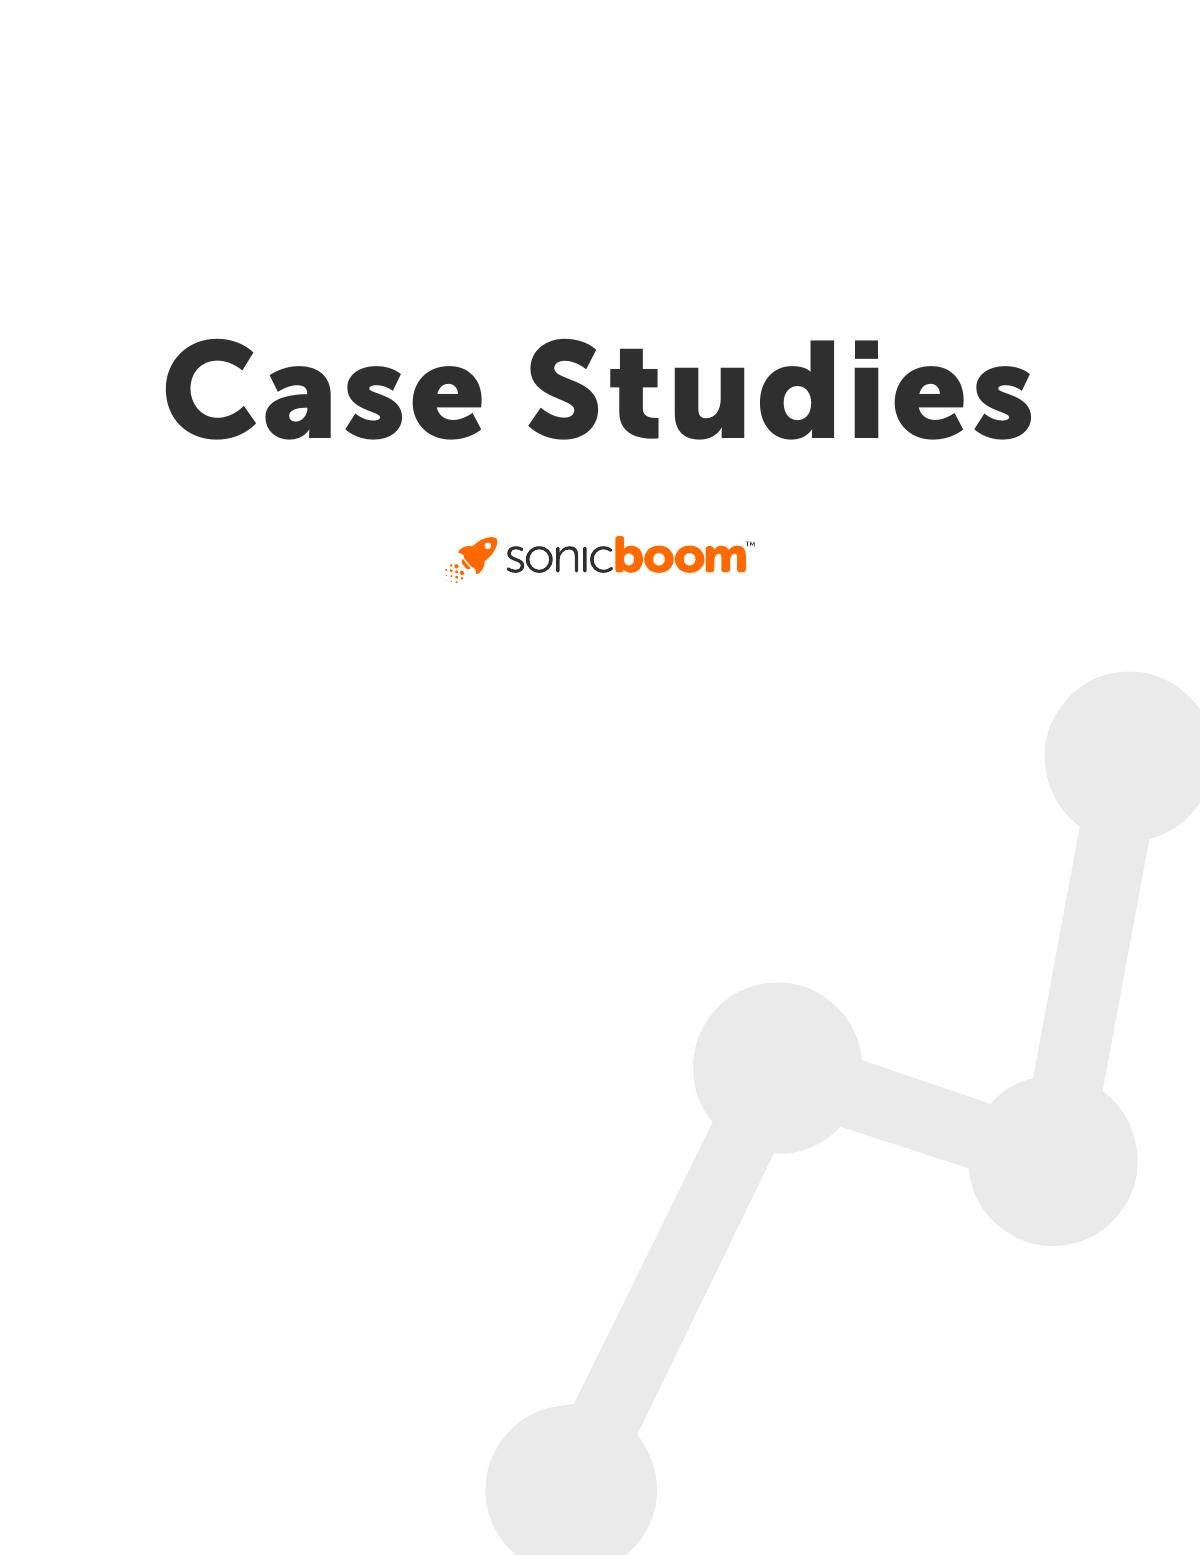 Sonic Boom case studies